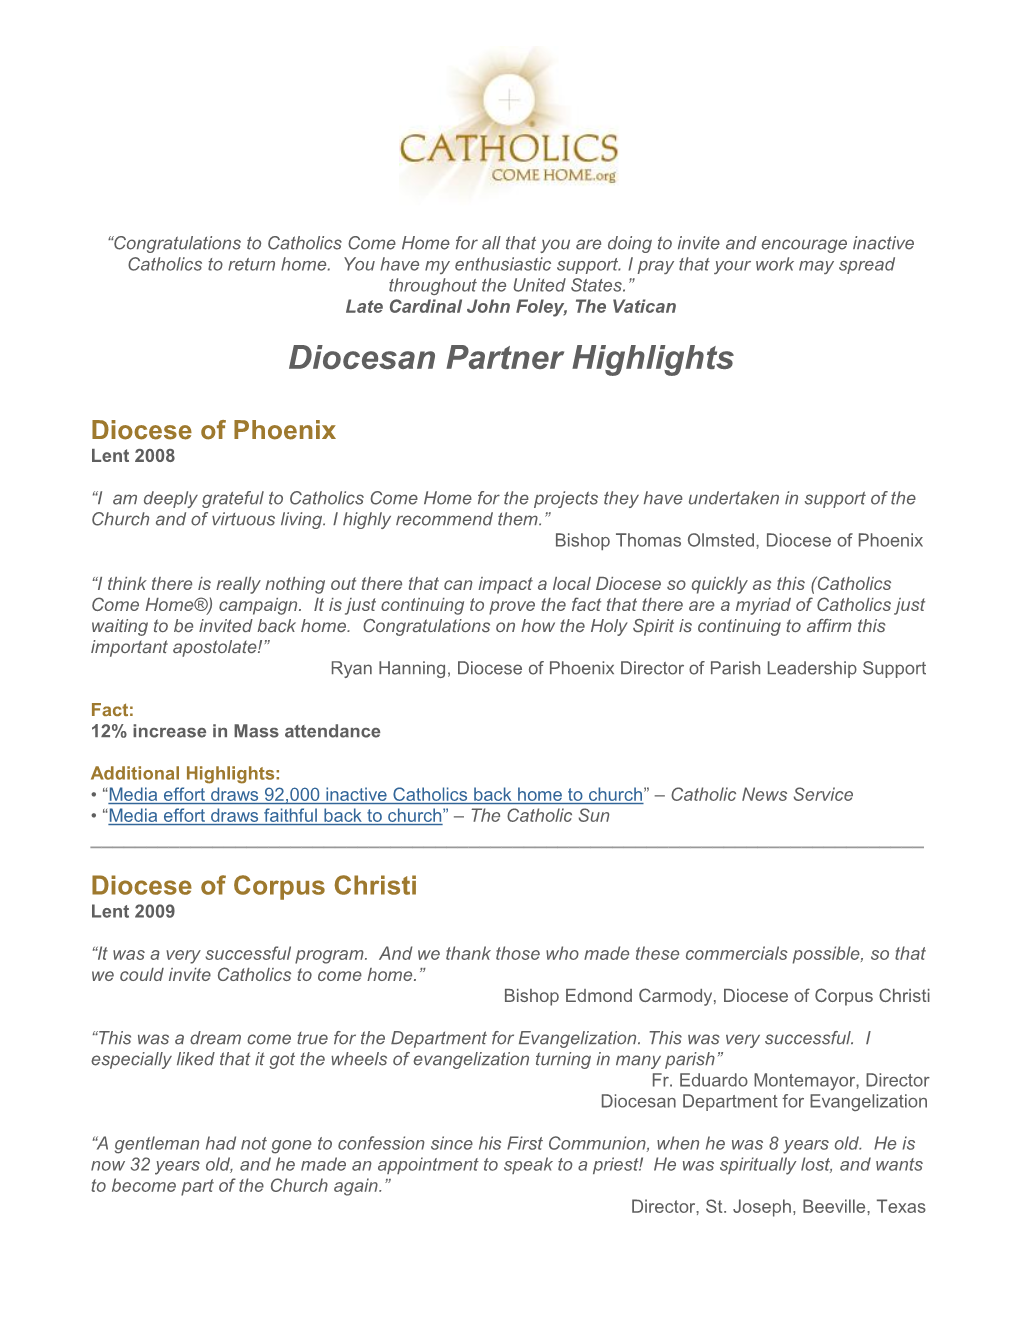 Diocesan Partner Highlights